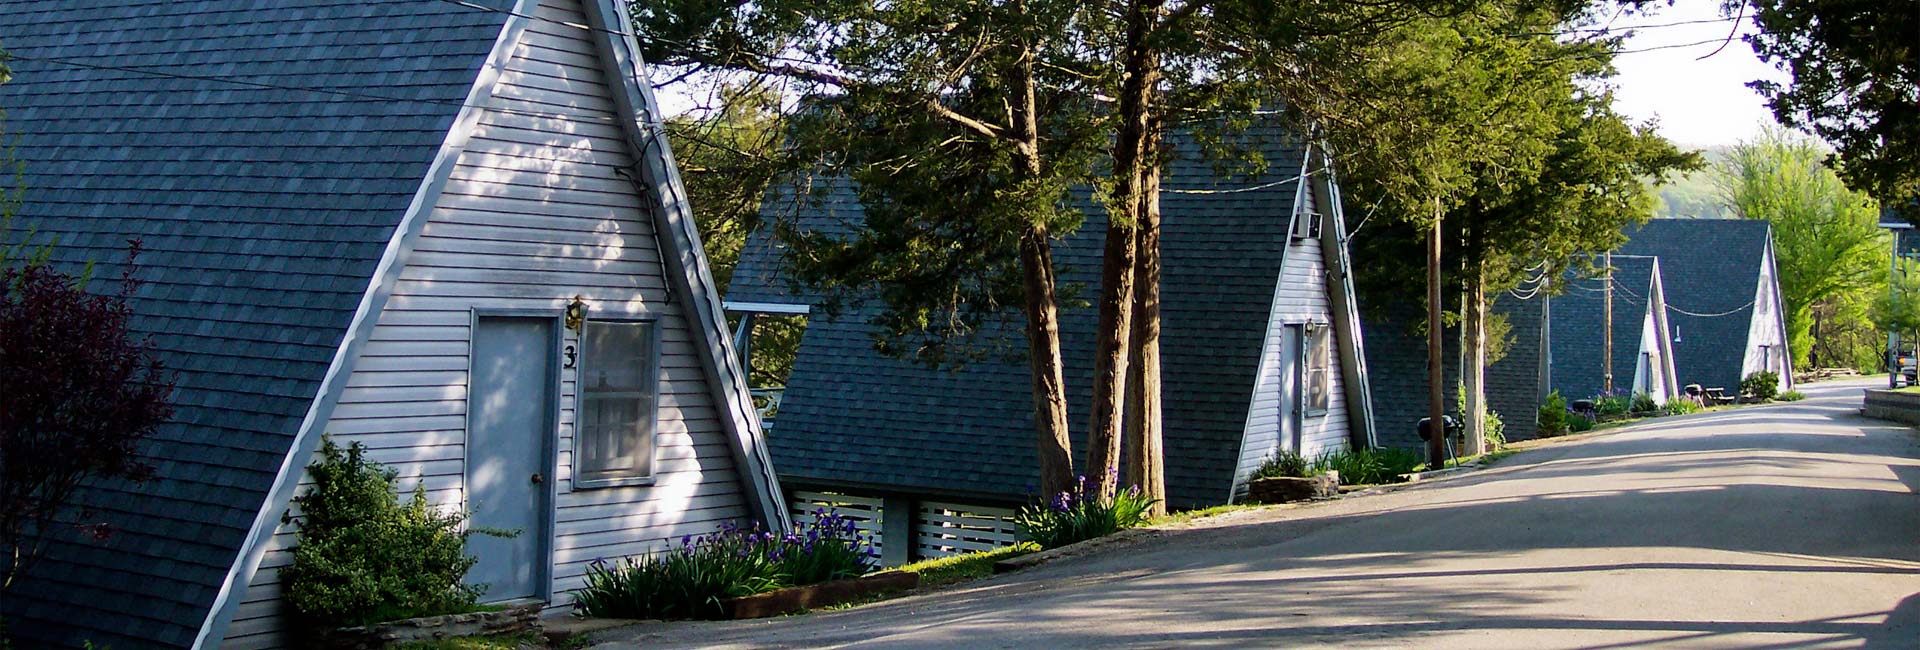 A-Frame Cottages at Alpine Lodge Resort, Branson, MO.